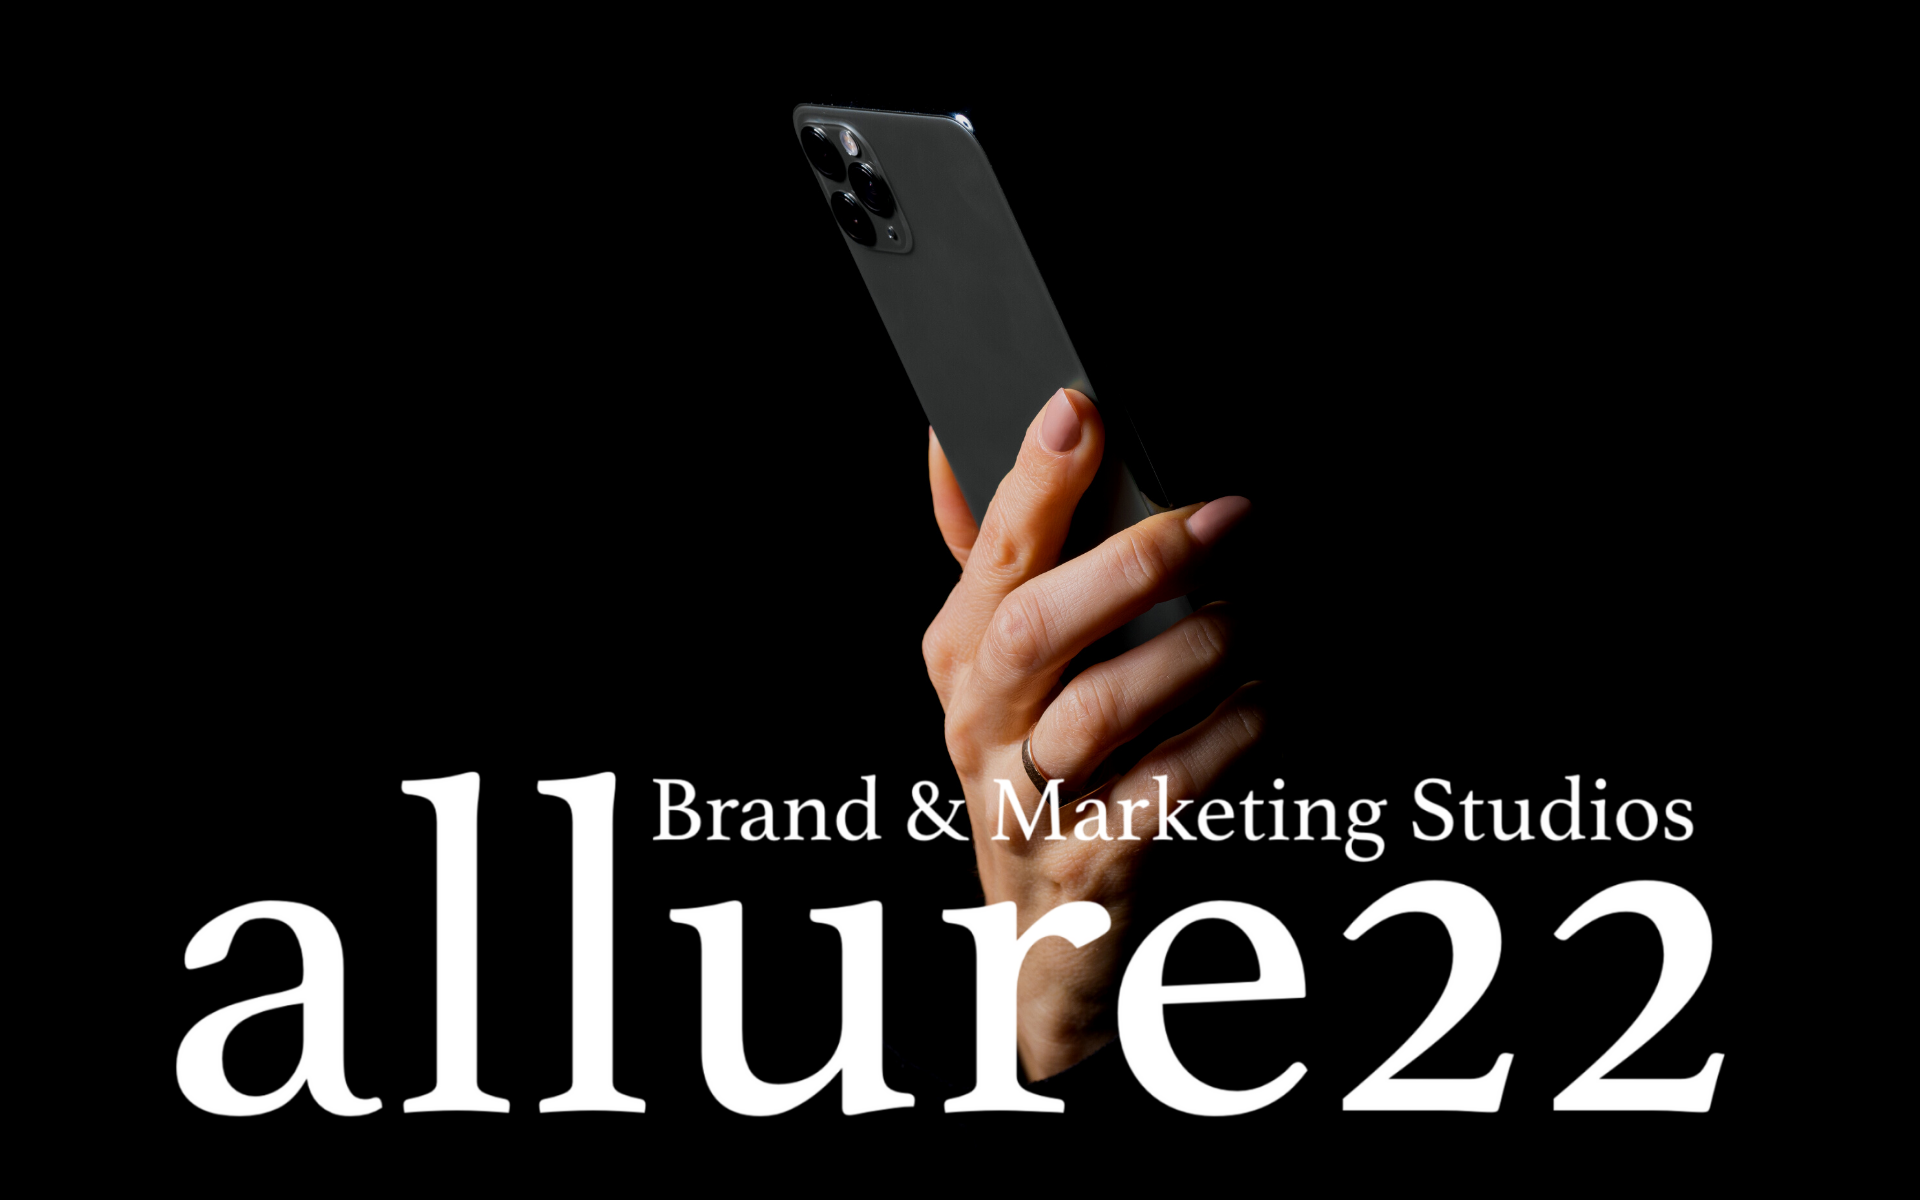 Allure22 Brand & Marketing Studios